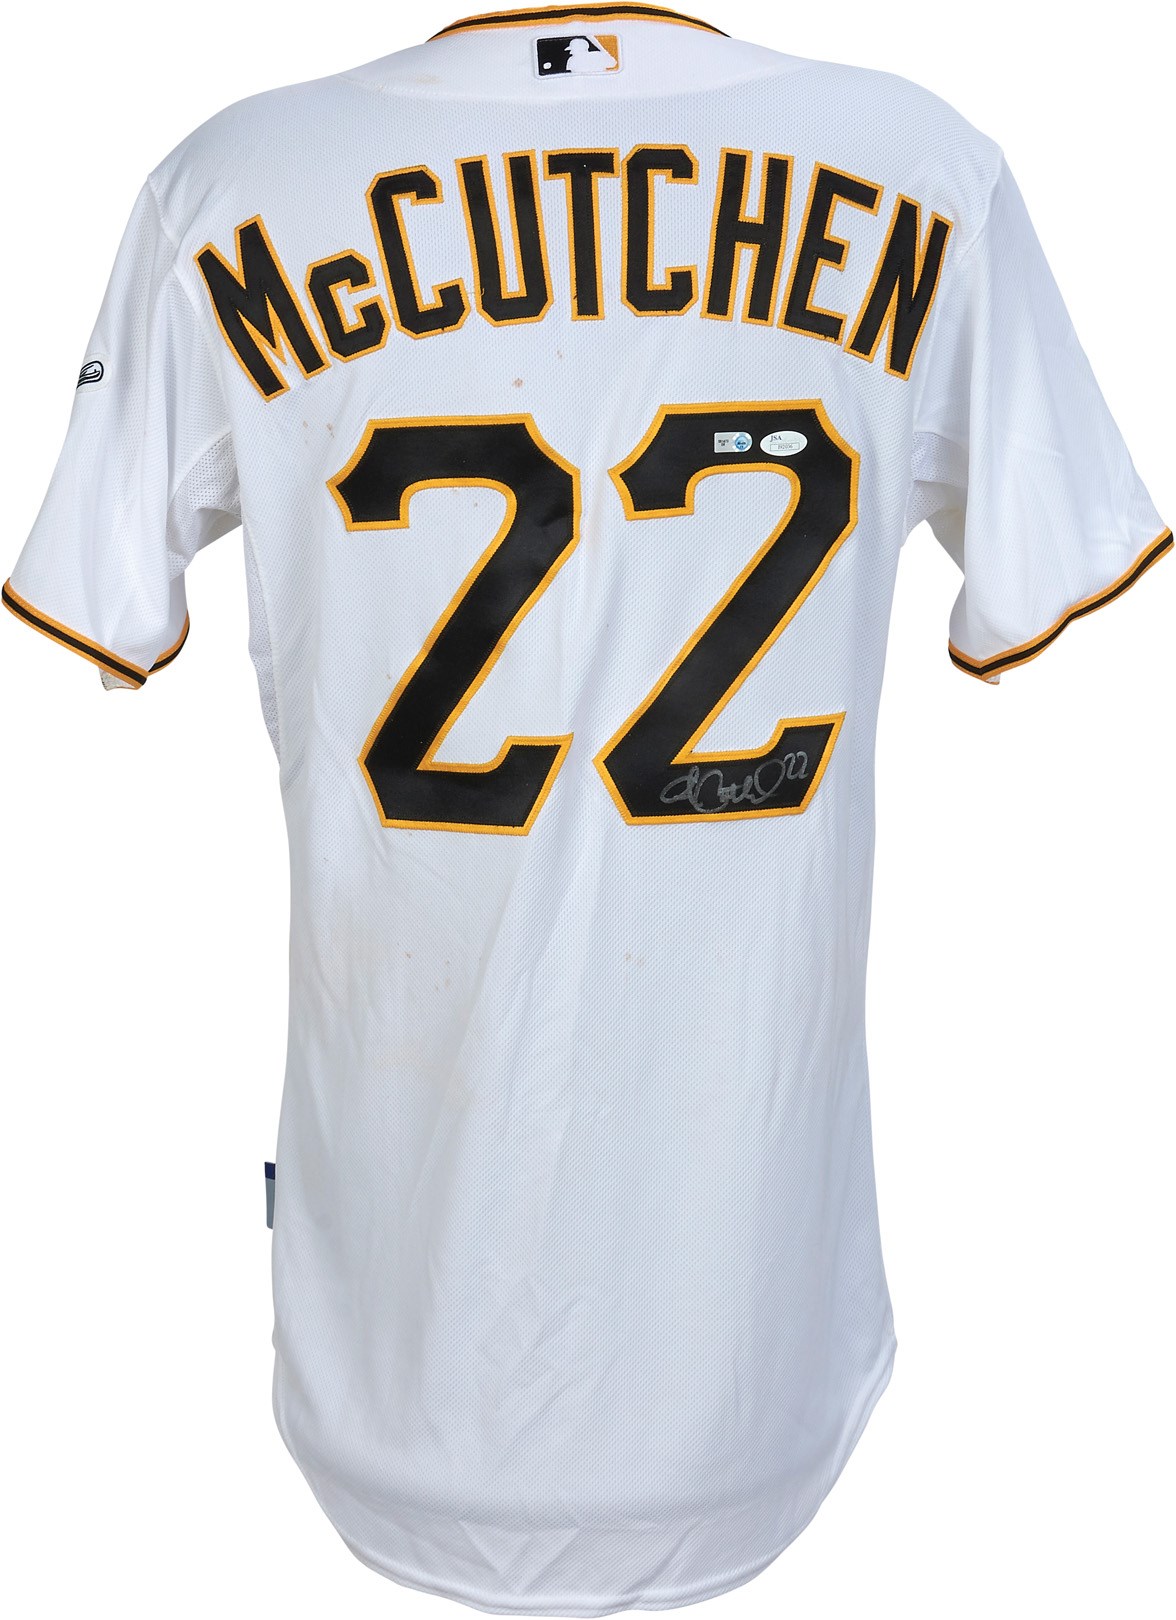 2013 MVP Andrew McCutchen Game Worn 